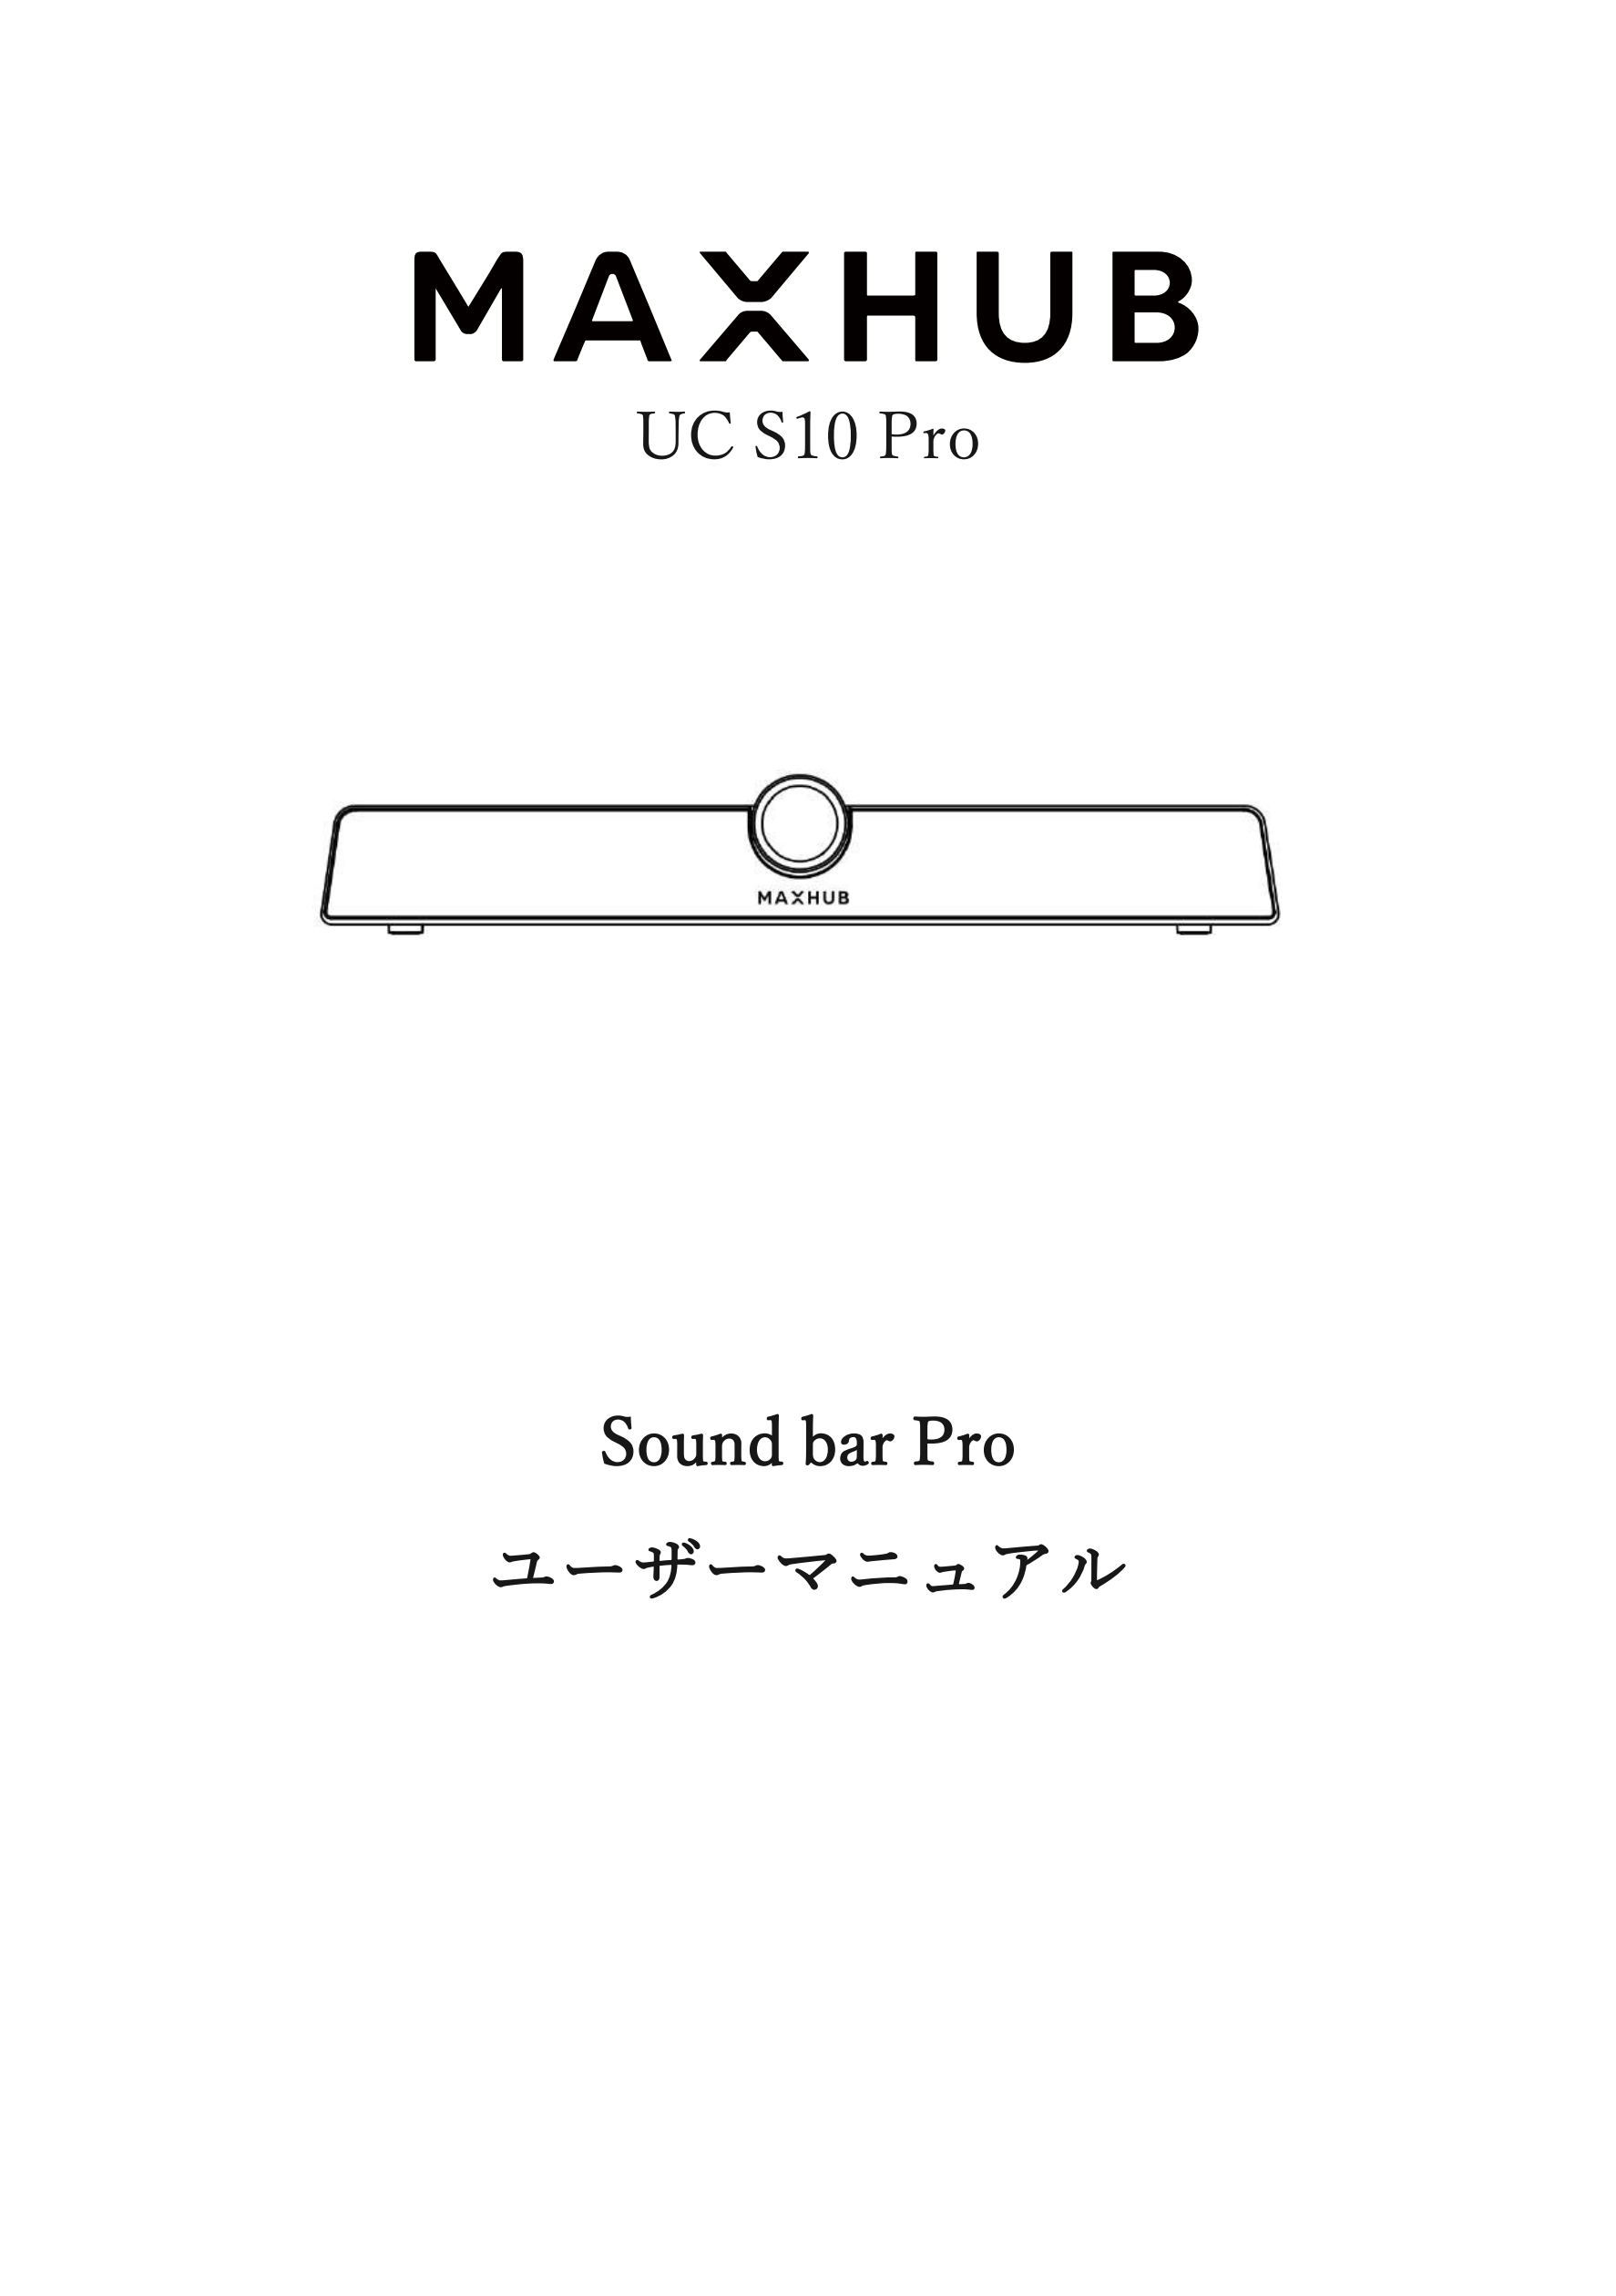 Sound bar Pro